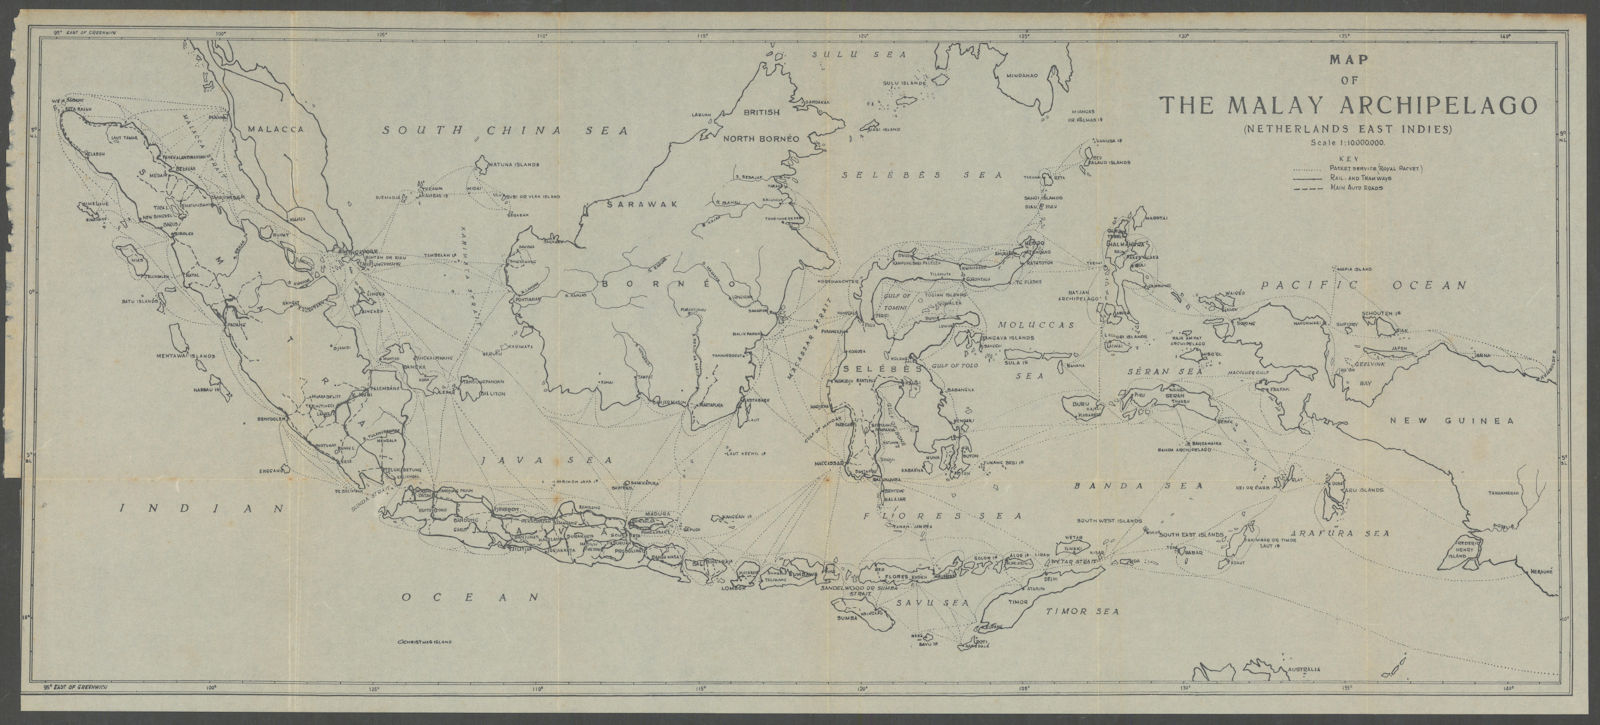 Associate Product The Malay Archipelago (Netherlands East Indies), Indonesia. VAN STOCKUM 1930 map